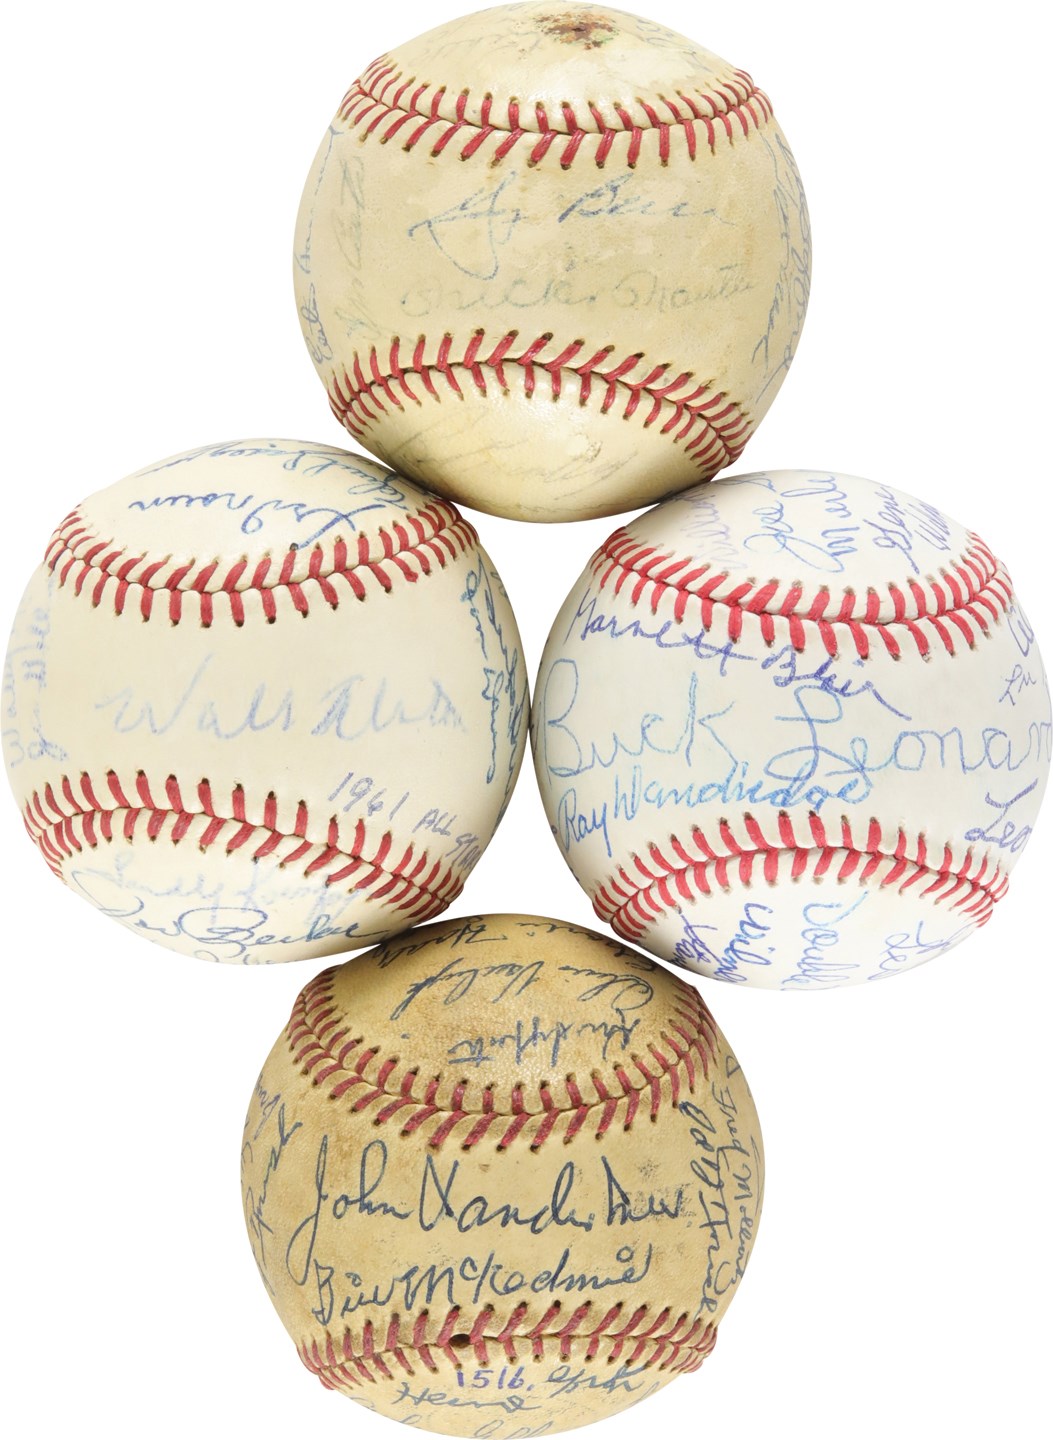 Baseball Autographs - Mutli-Signed Baseball Collection w/HOFers & Stars (4)